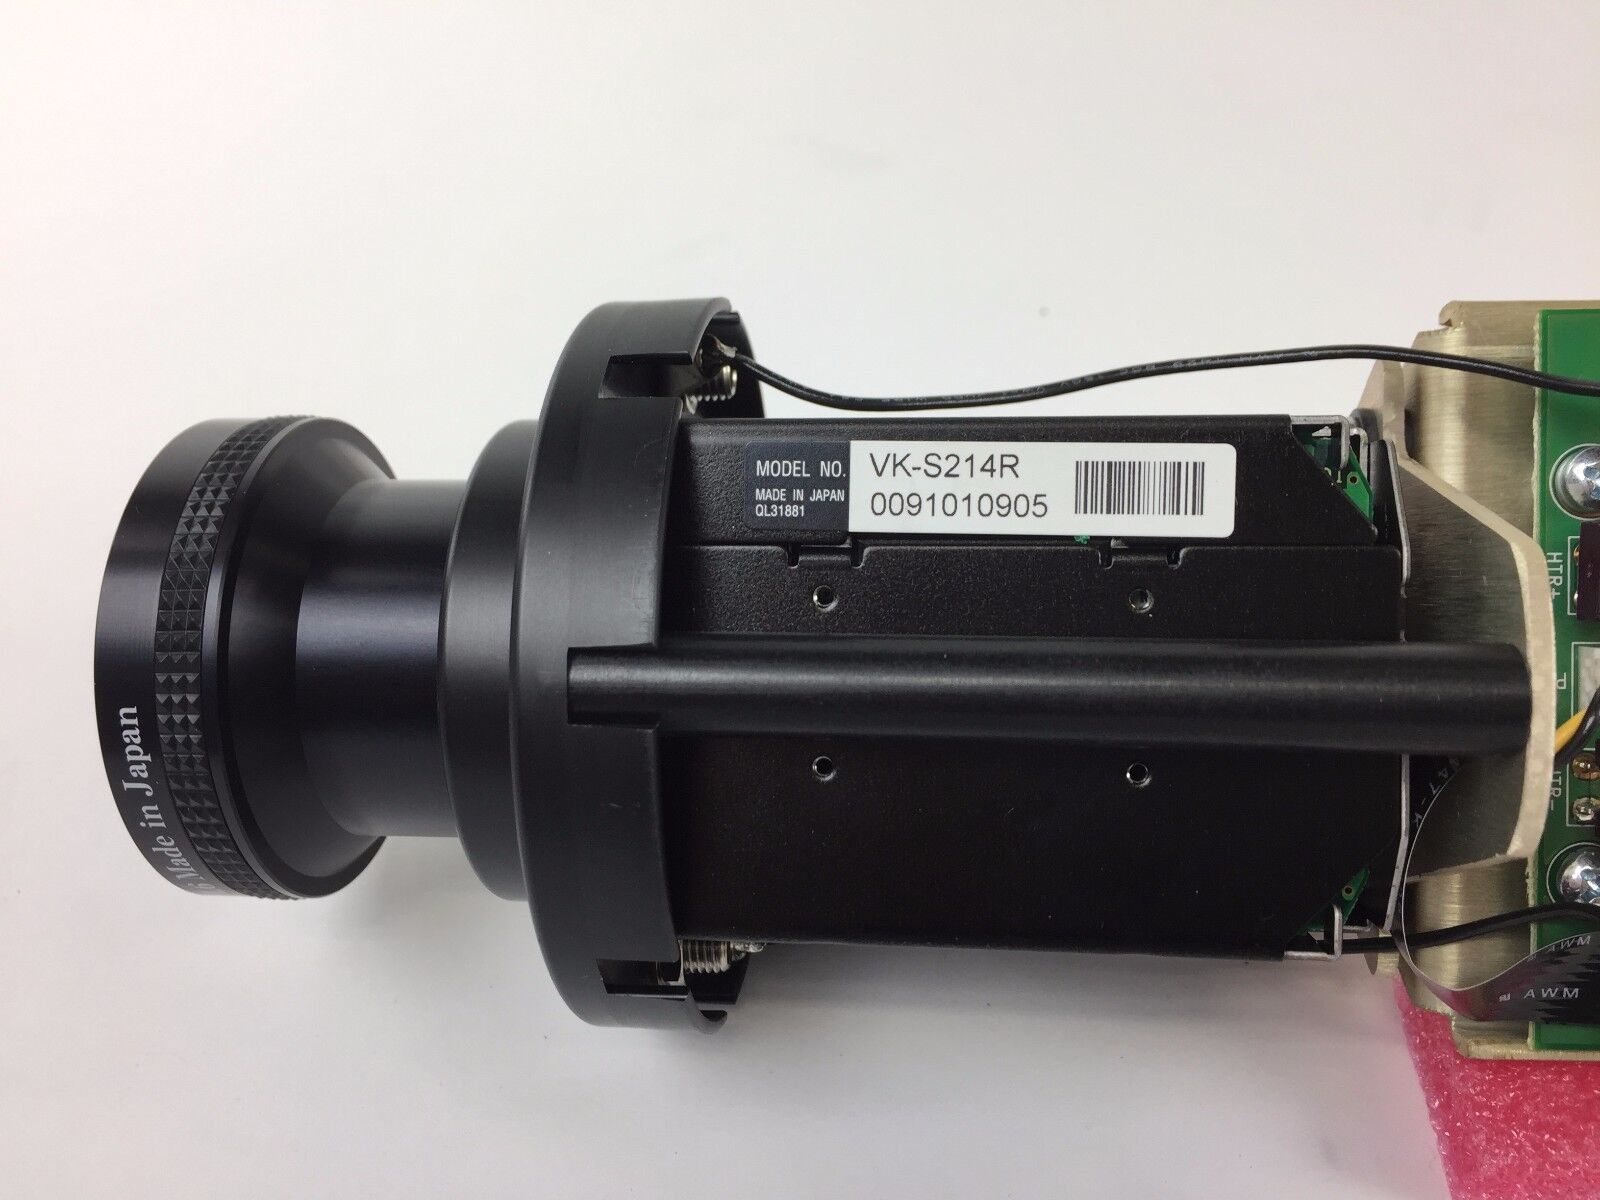 Hitachi VK-S214R Surveillance Camera with WTI-WL6 Lens and 110V AC Power Board